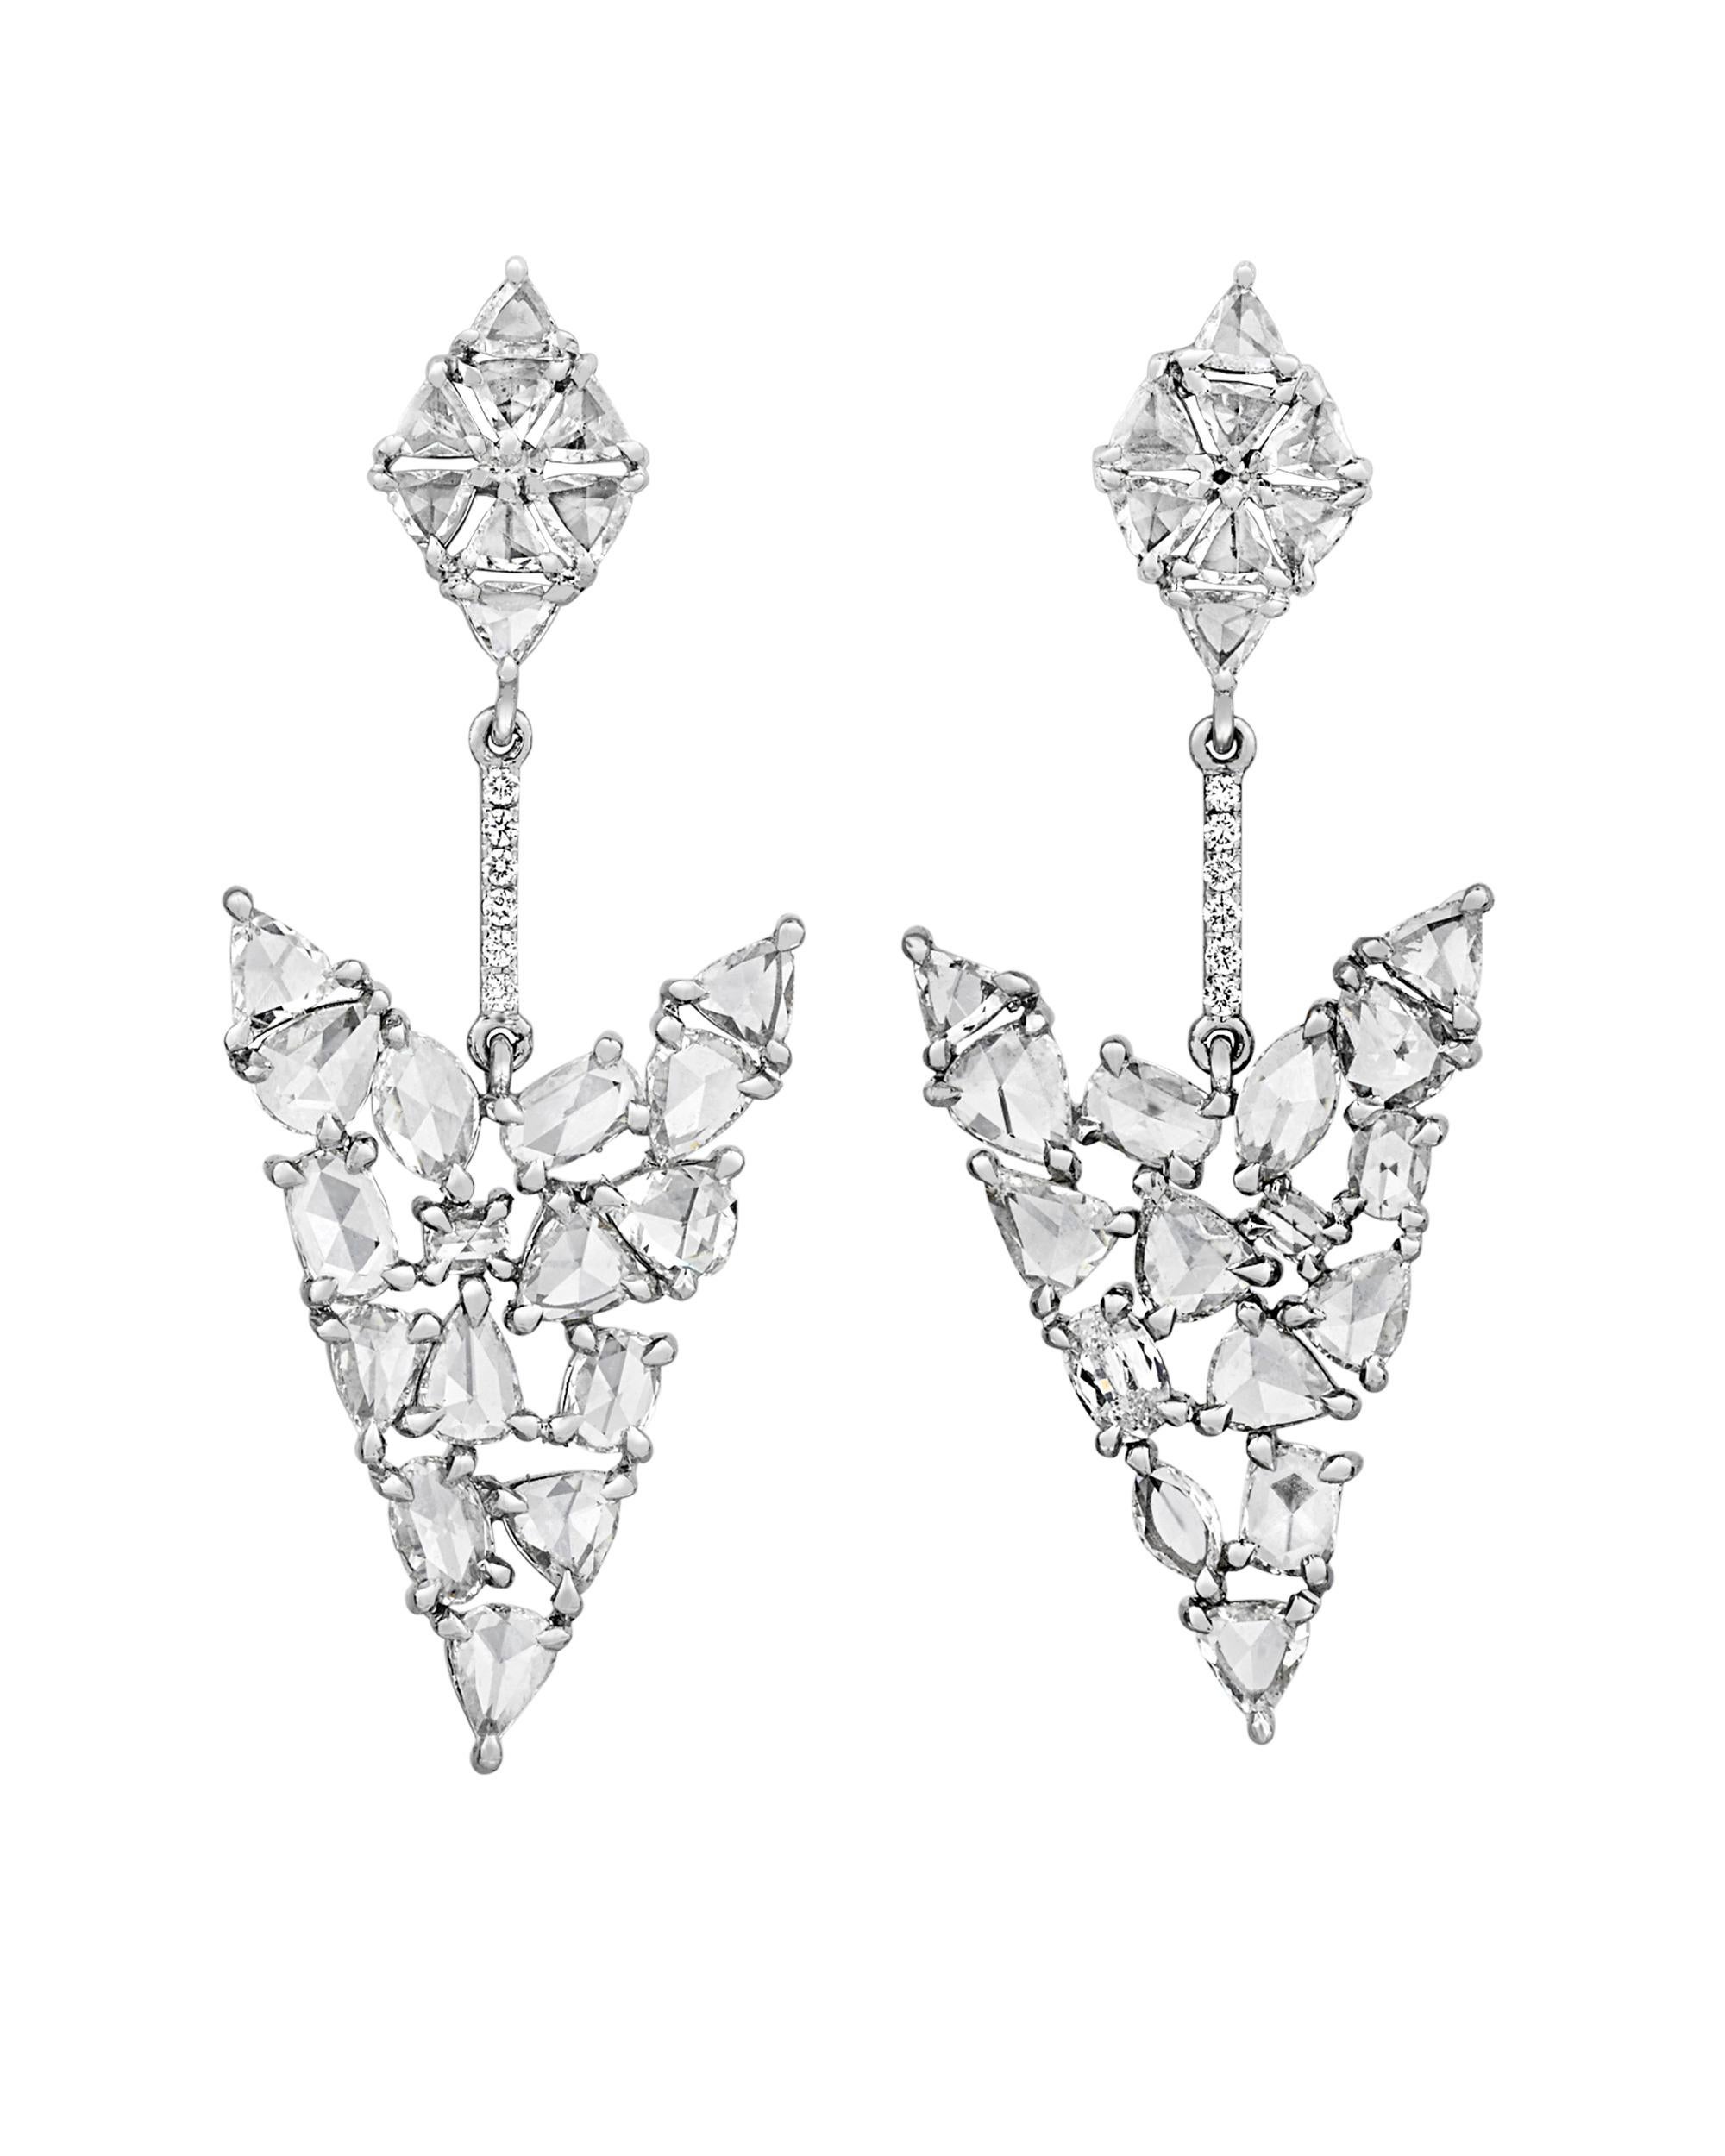 Modern Rose-Cut Diamond Earrings, 4.45 Carat